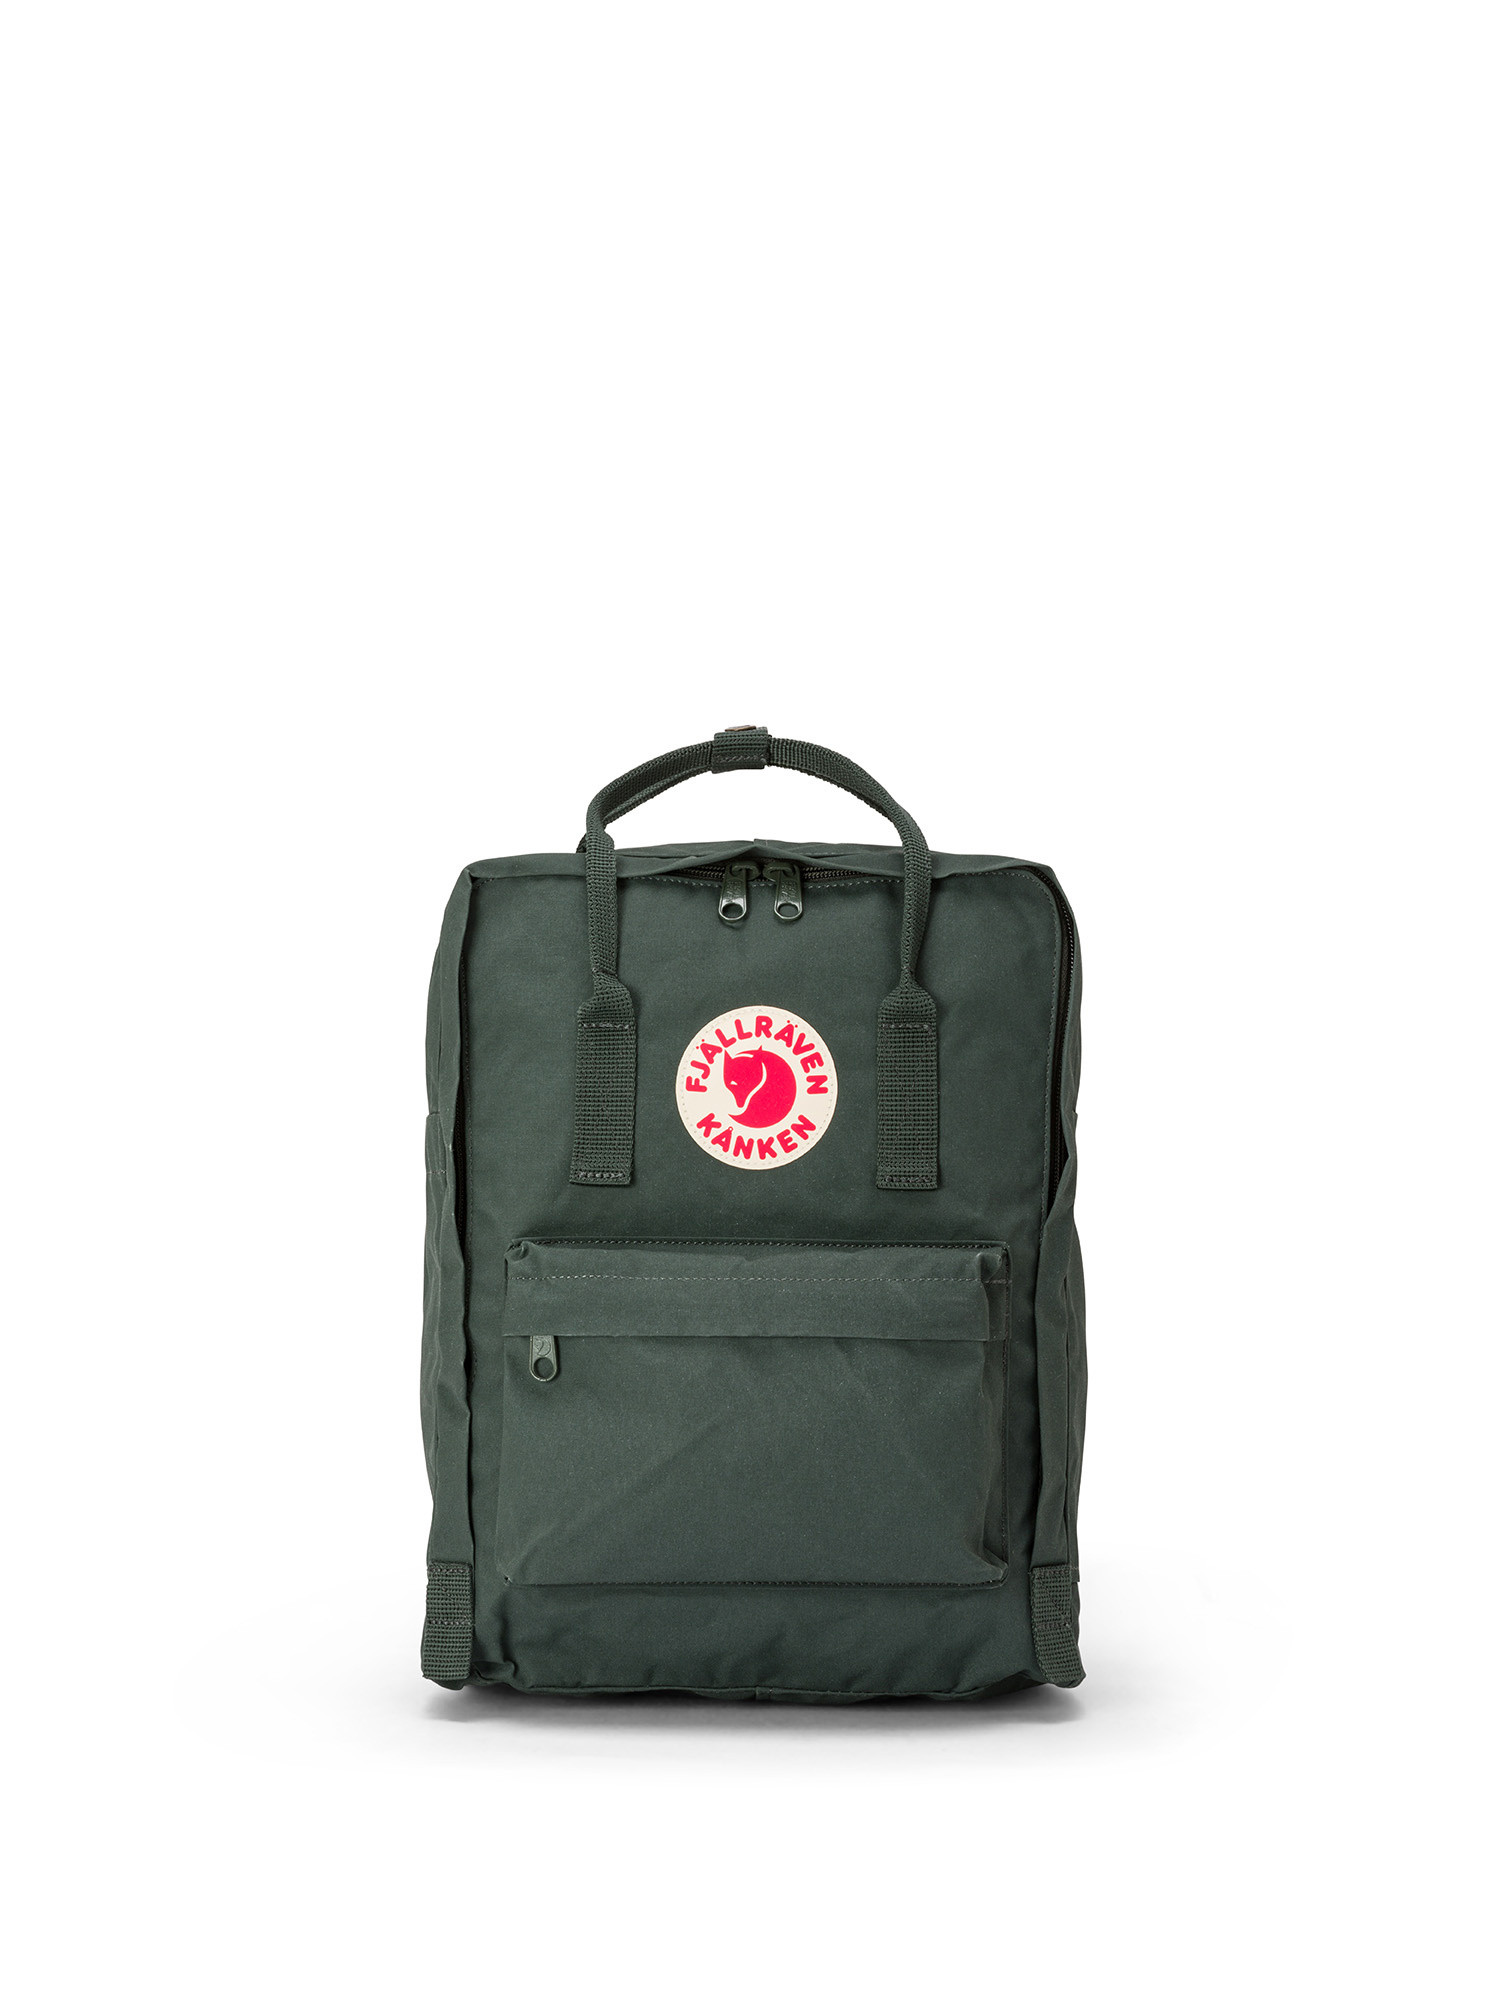 Fjallraven - Classic Kånken backpack in durable Vinylon fabric, Dark Green, large image number 0